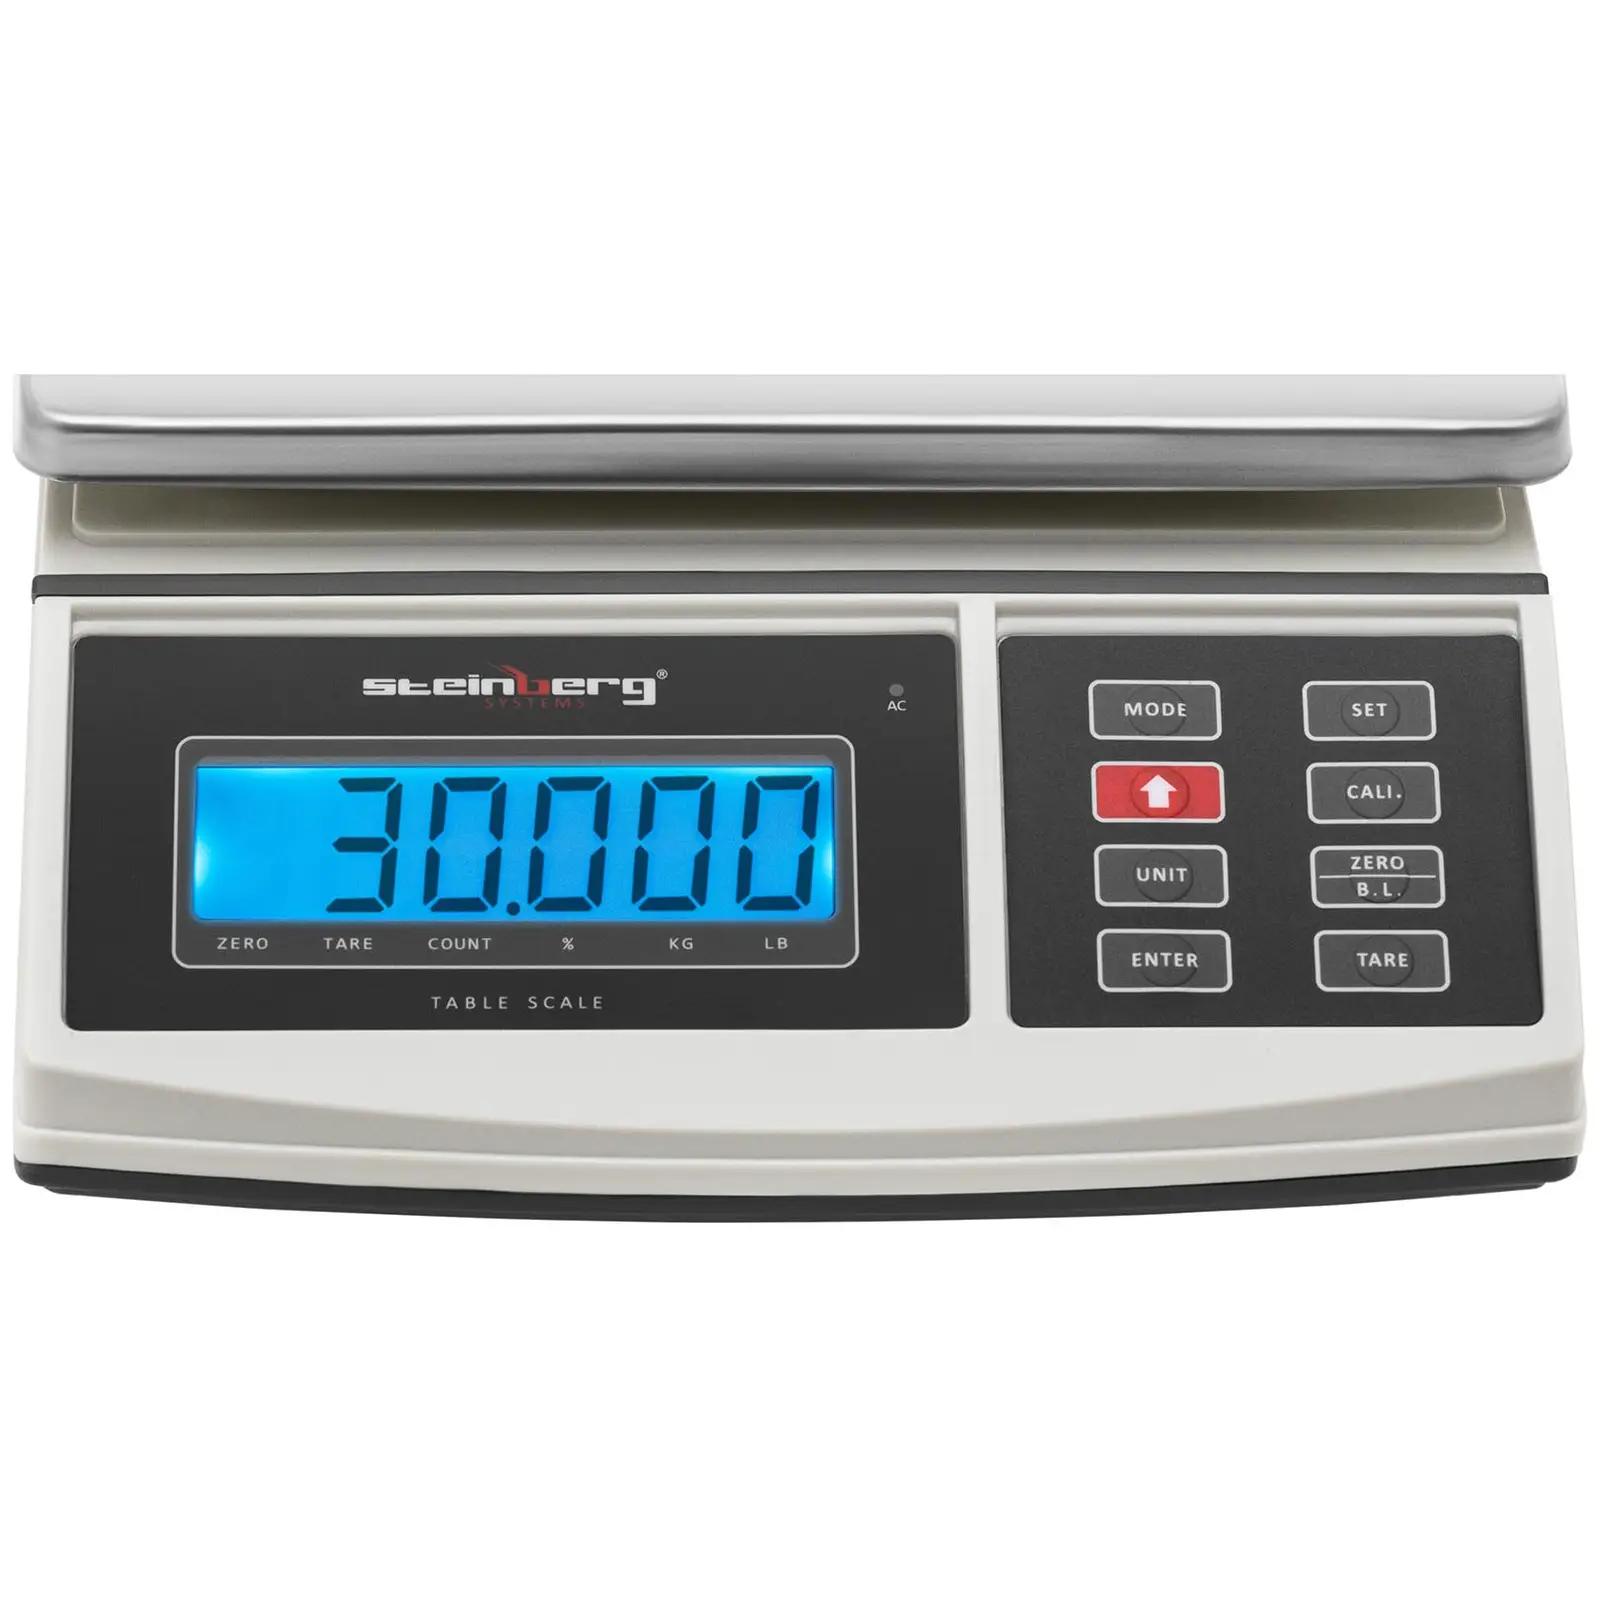 Bilancia da tavolo - 3 kg / 1 g - 210 x 270 mm - Indicatore luminoso - LCD